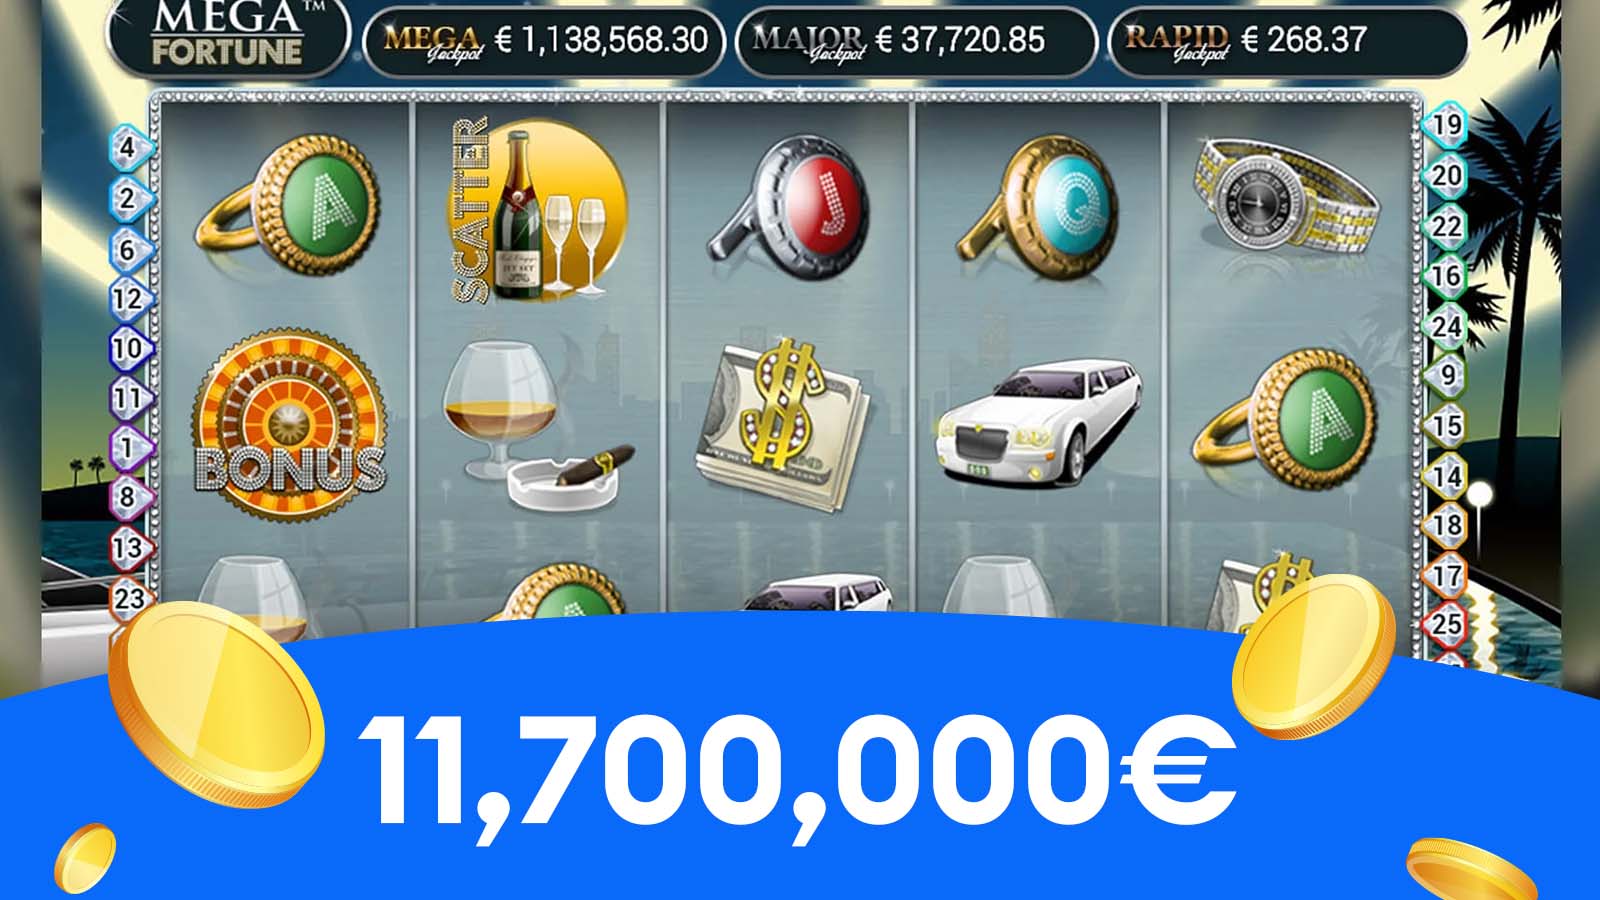 11,700,000€ la Mega Fortune